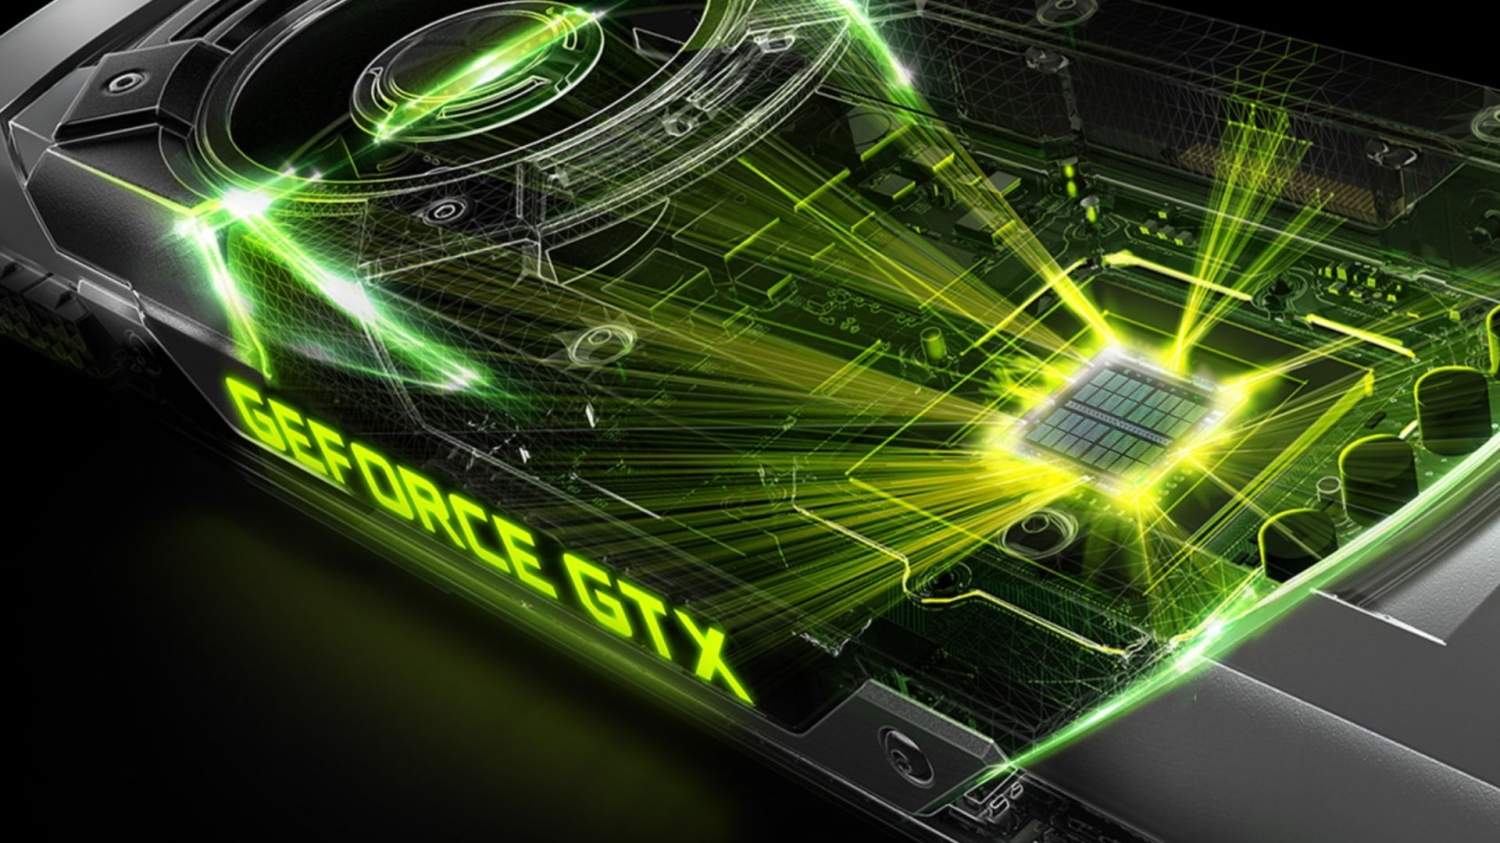 End of an era, NVIDIA has produced its last GeForce GTX GPU... it's all ...